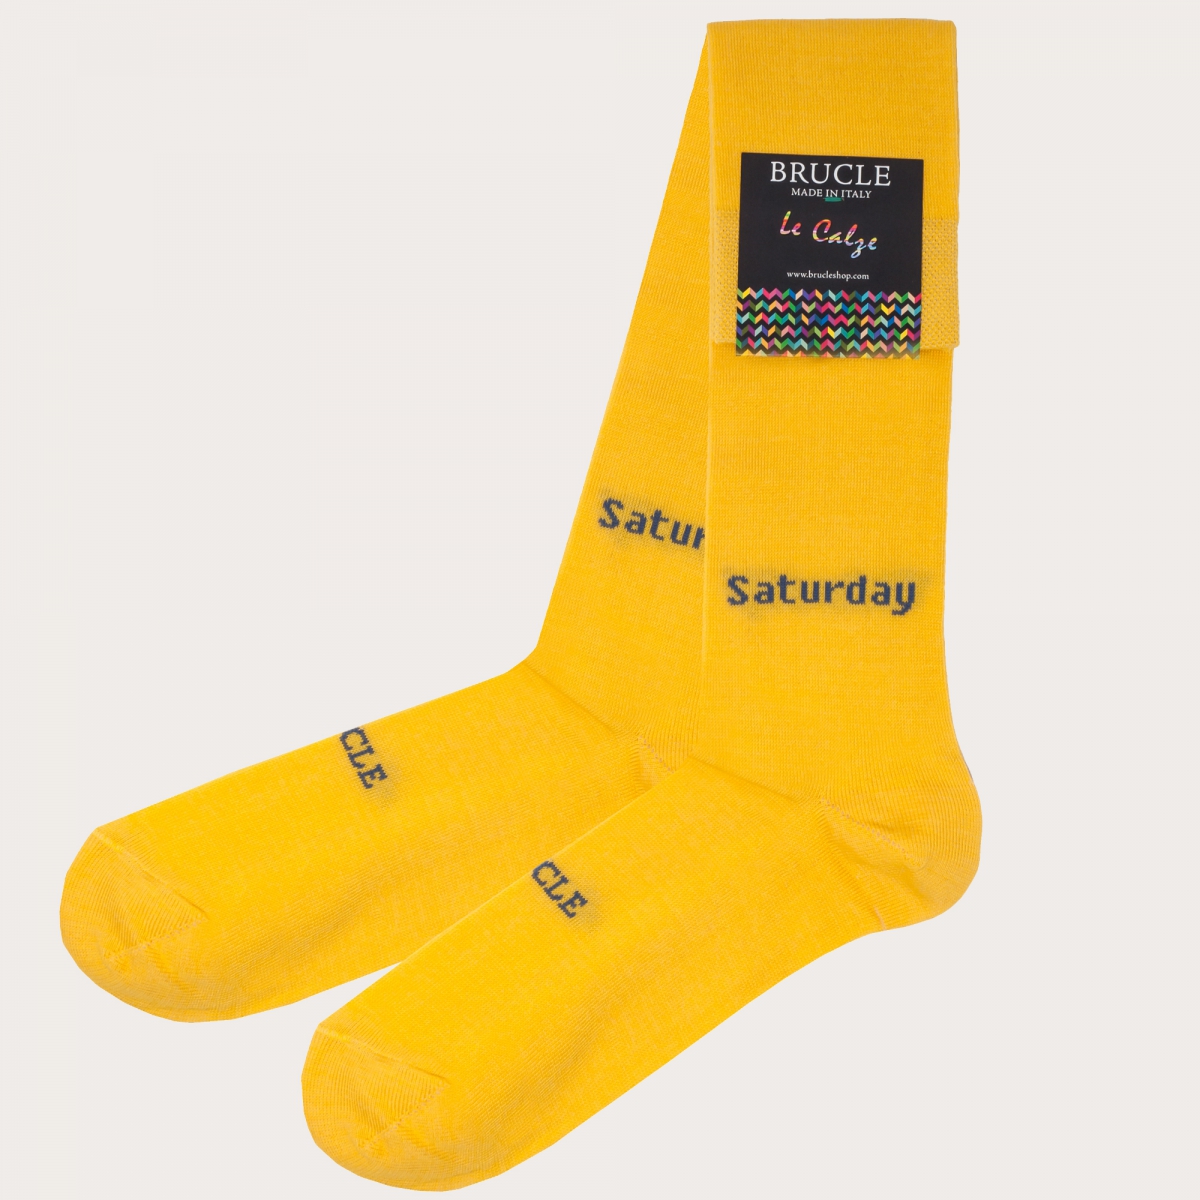 BRUCLE Socken herren gelb "Samstag"